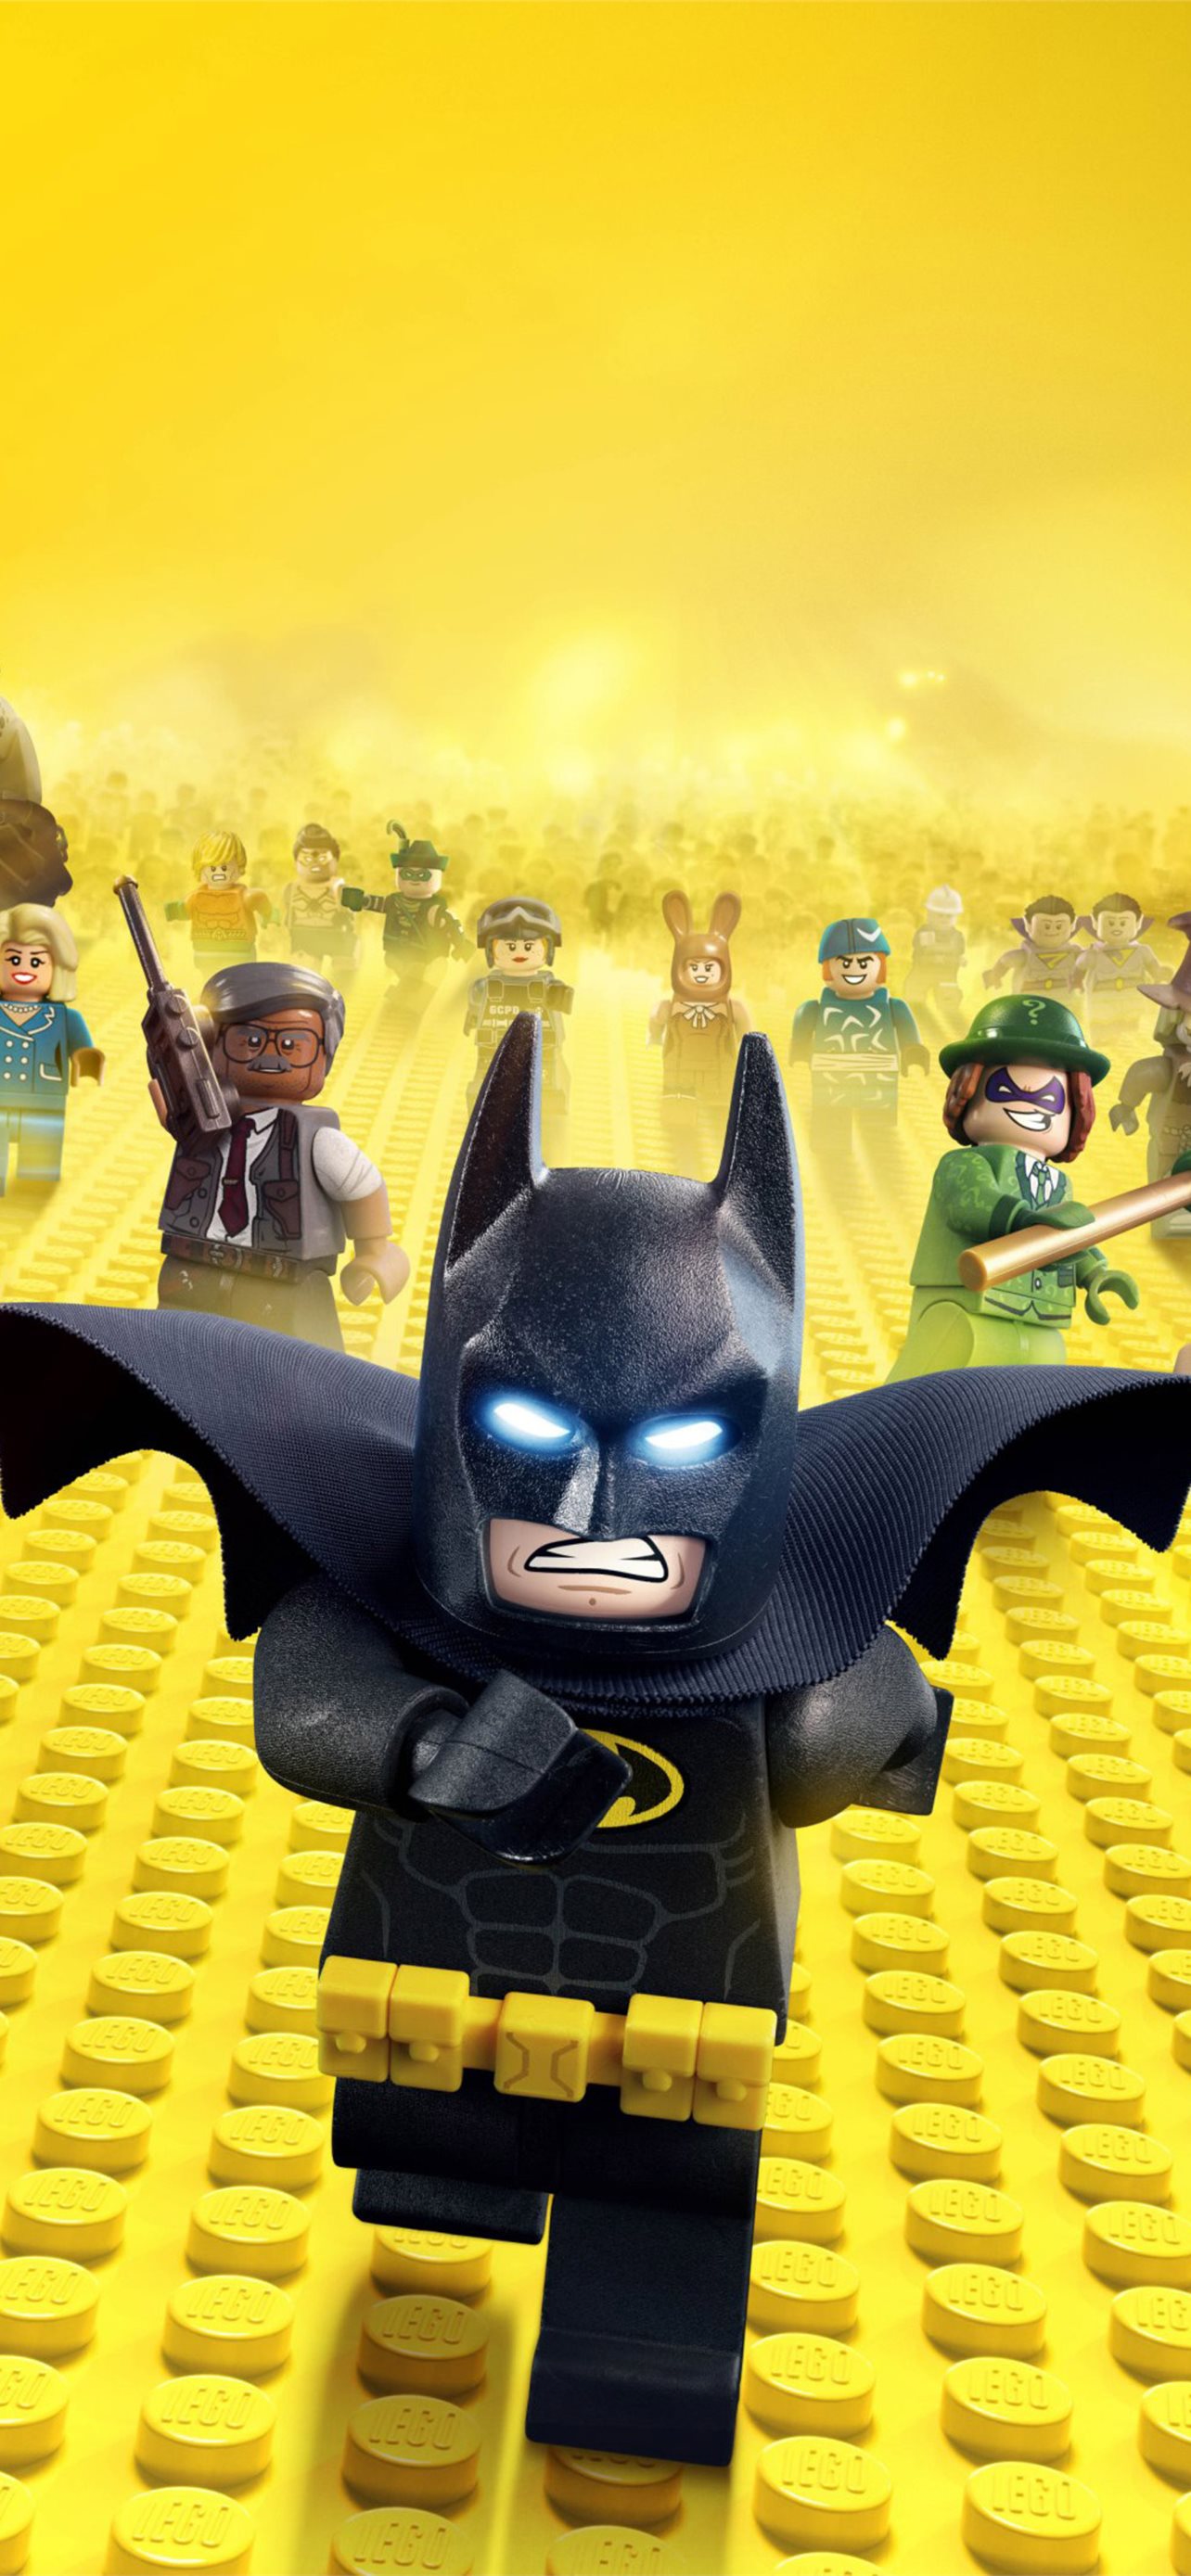 The Lego Batman Movie iPhone Wallpaper